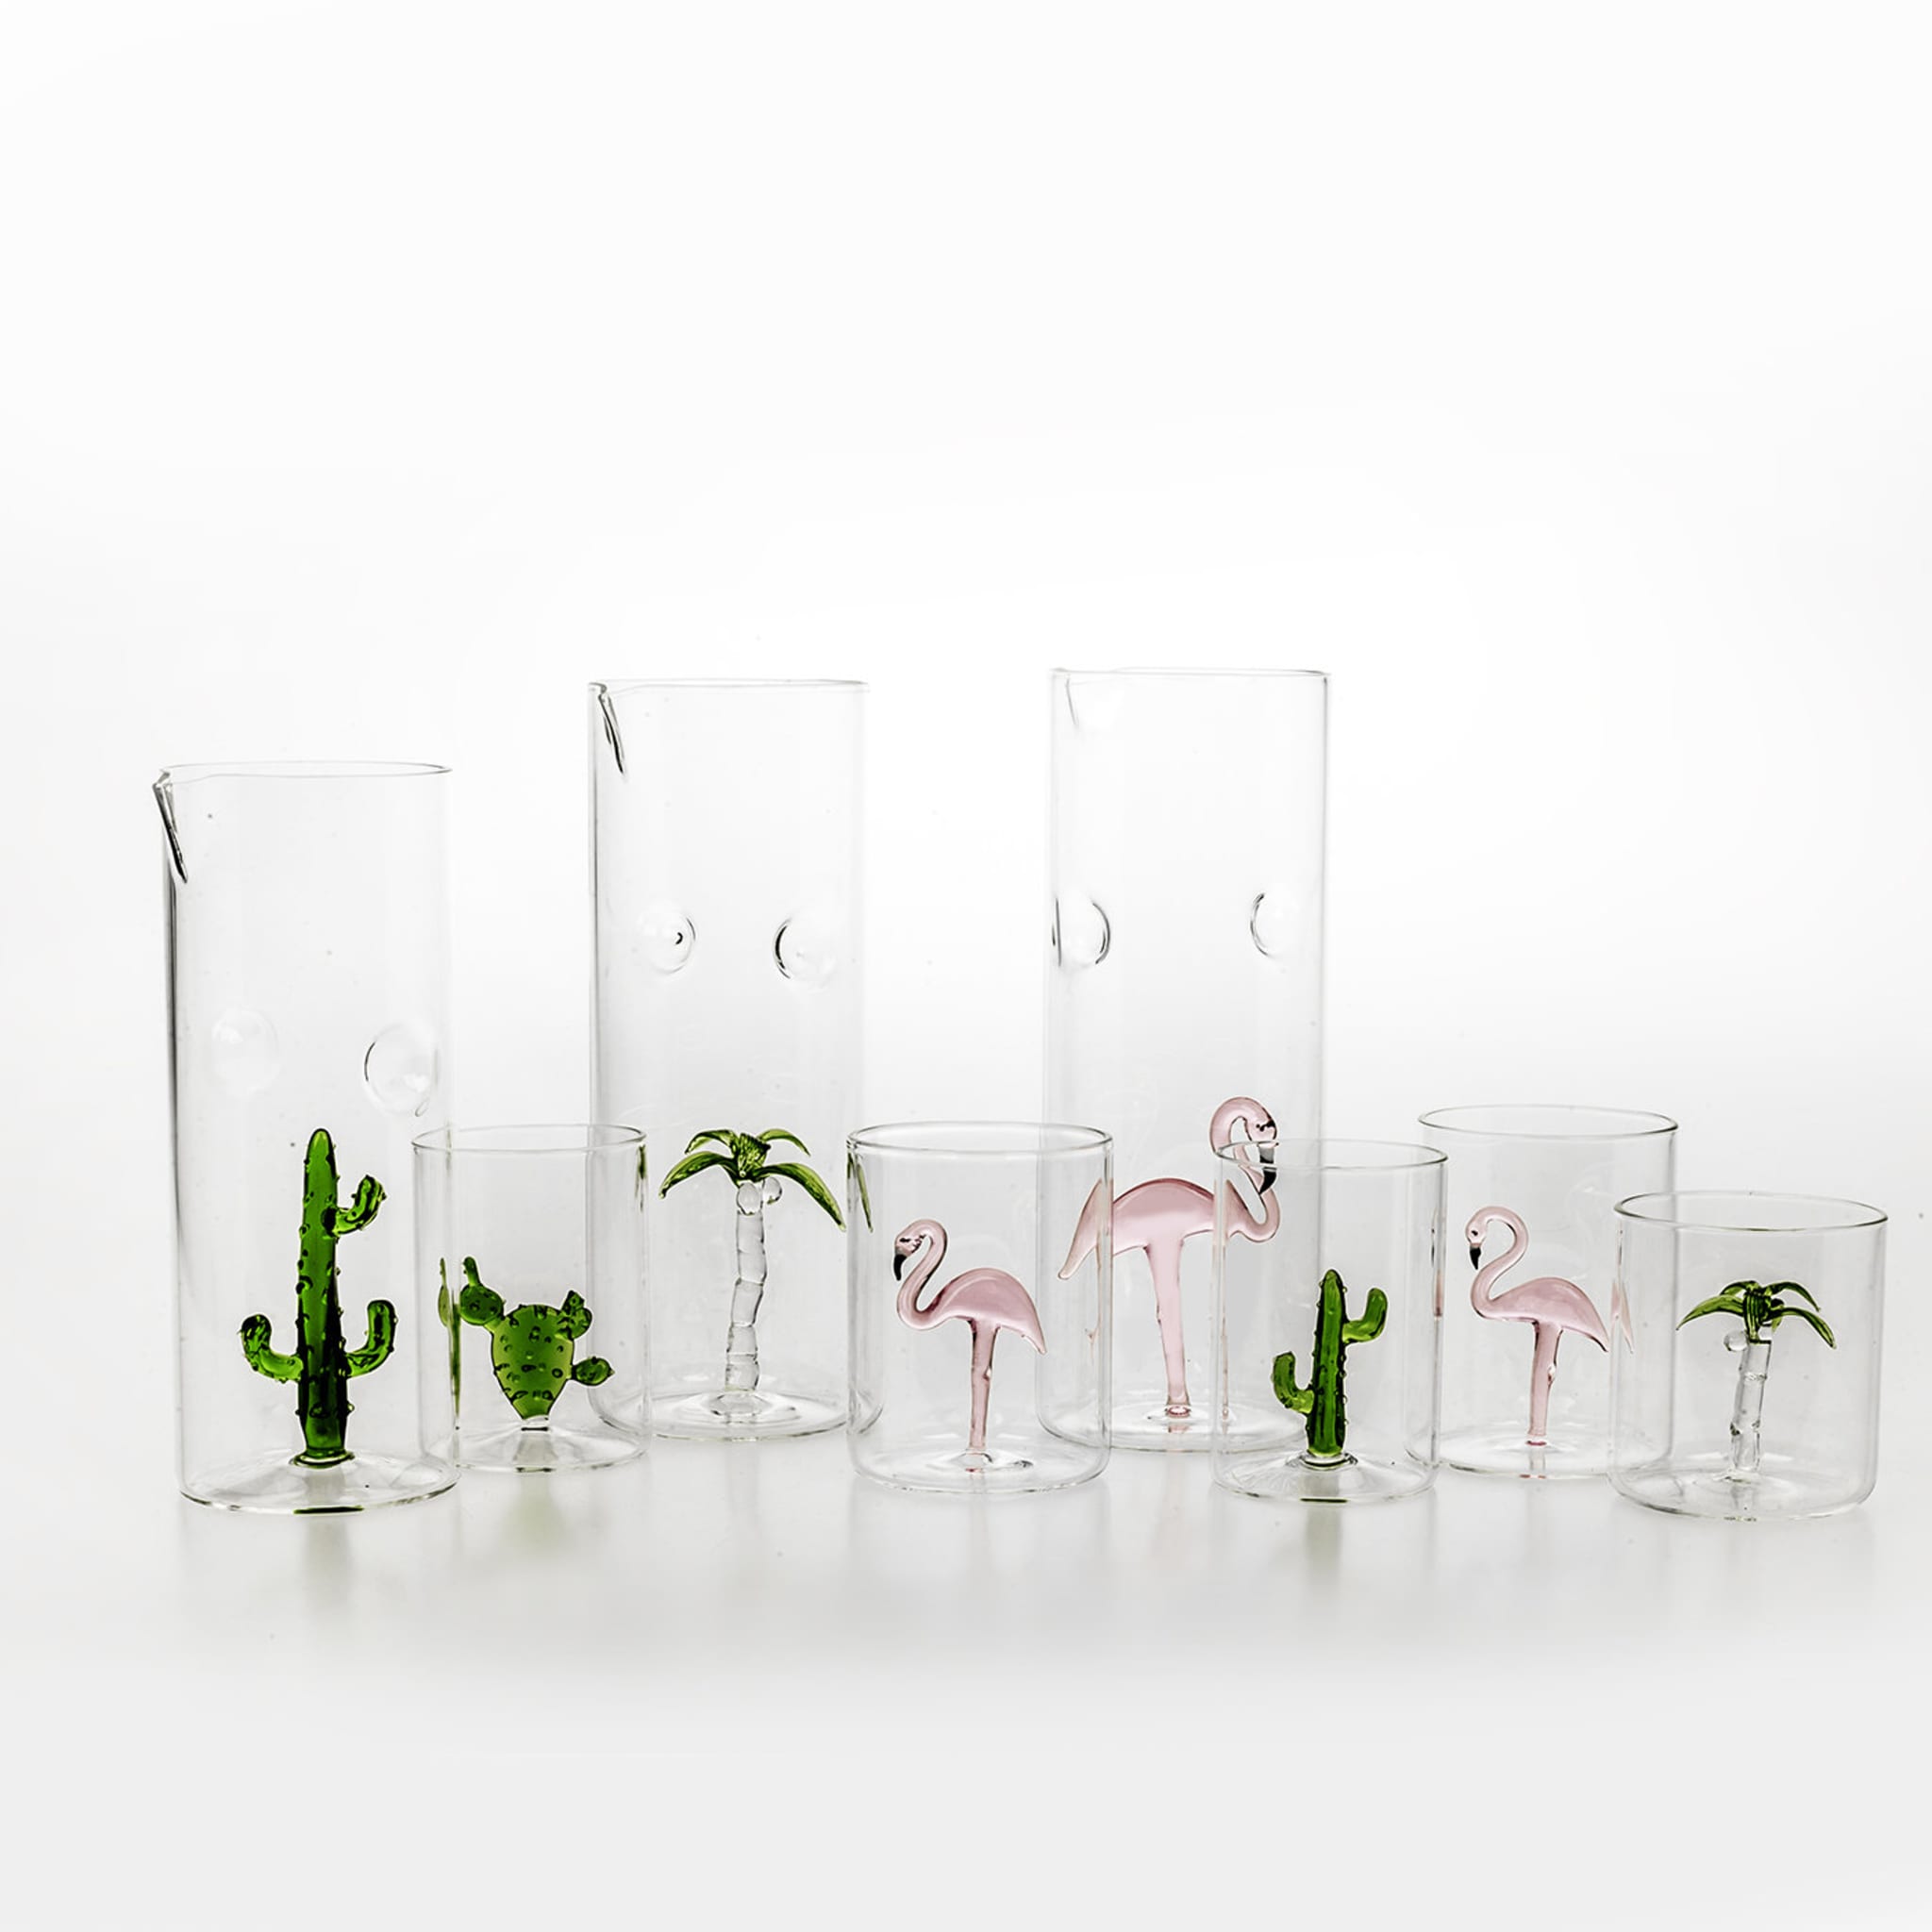 Fenicottero Set of 4 Glasses and Pitcher - Alternative view 1